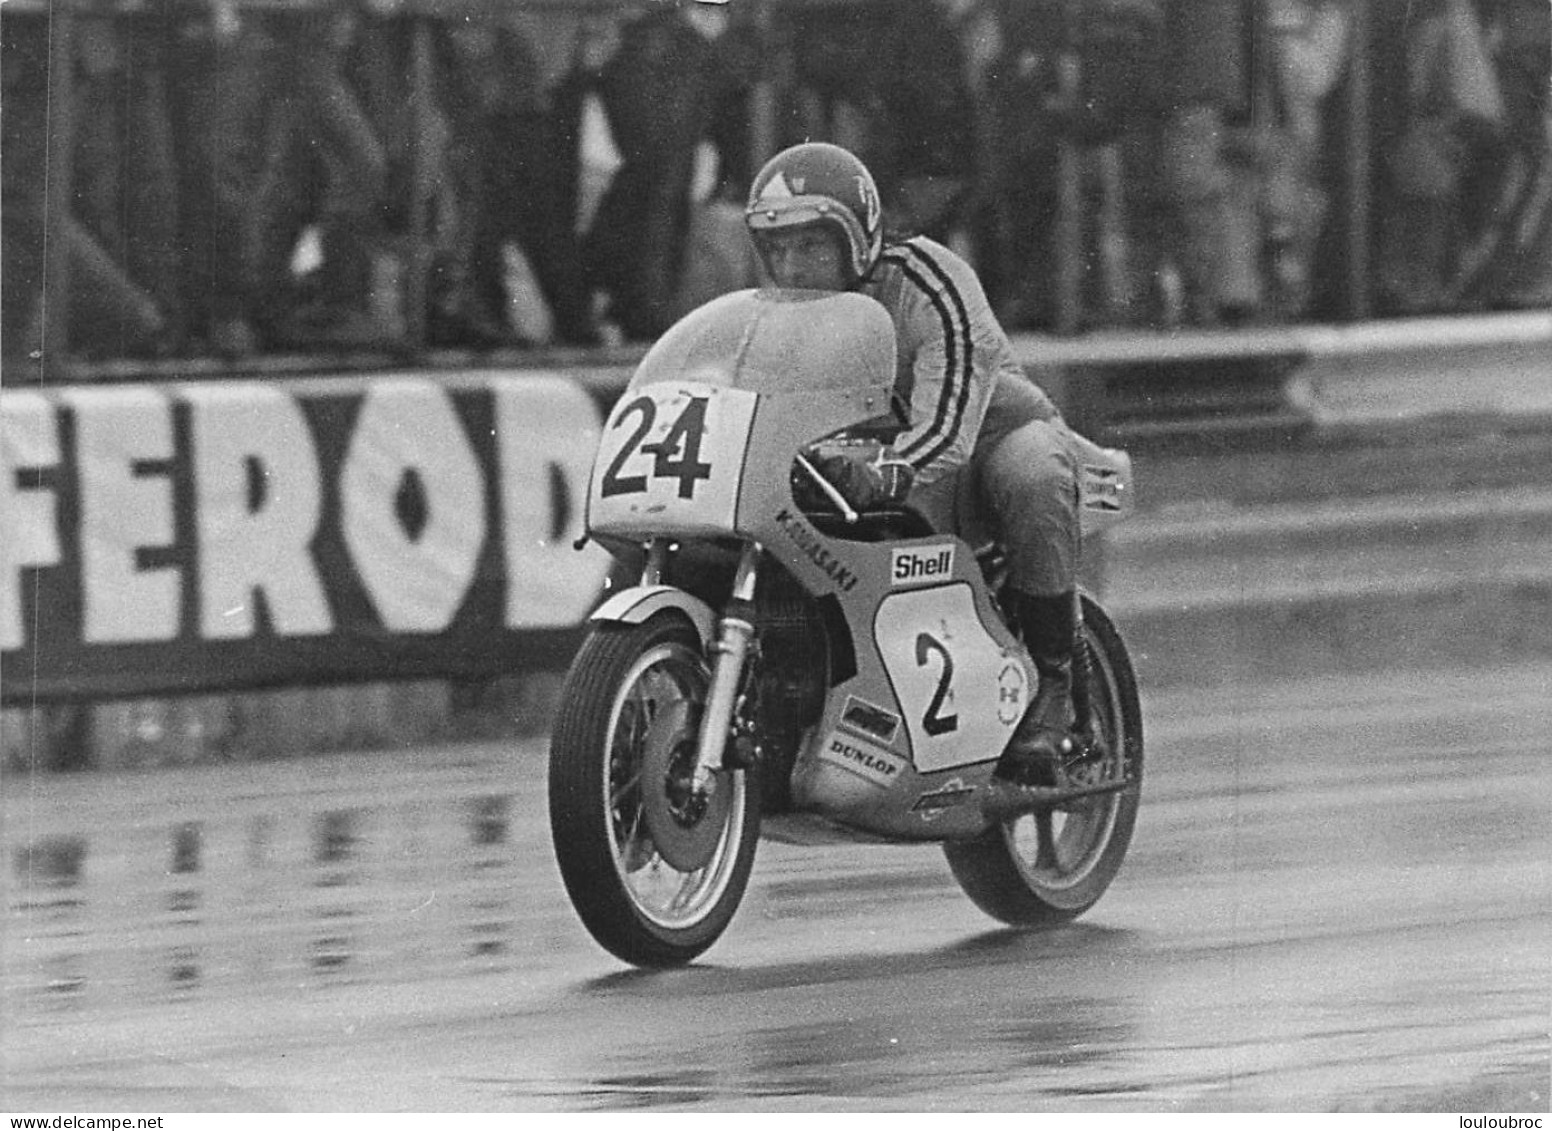 PILOTE  MOTO PERCY TAIT  COURSE ANNEE 1974 KAWASAKI 500CC  RACE OF THE YEAR PHOTO DE PRESSE ORIGINALE 18X13CM R1 - Deportes